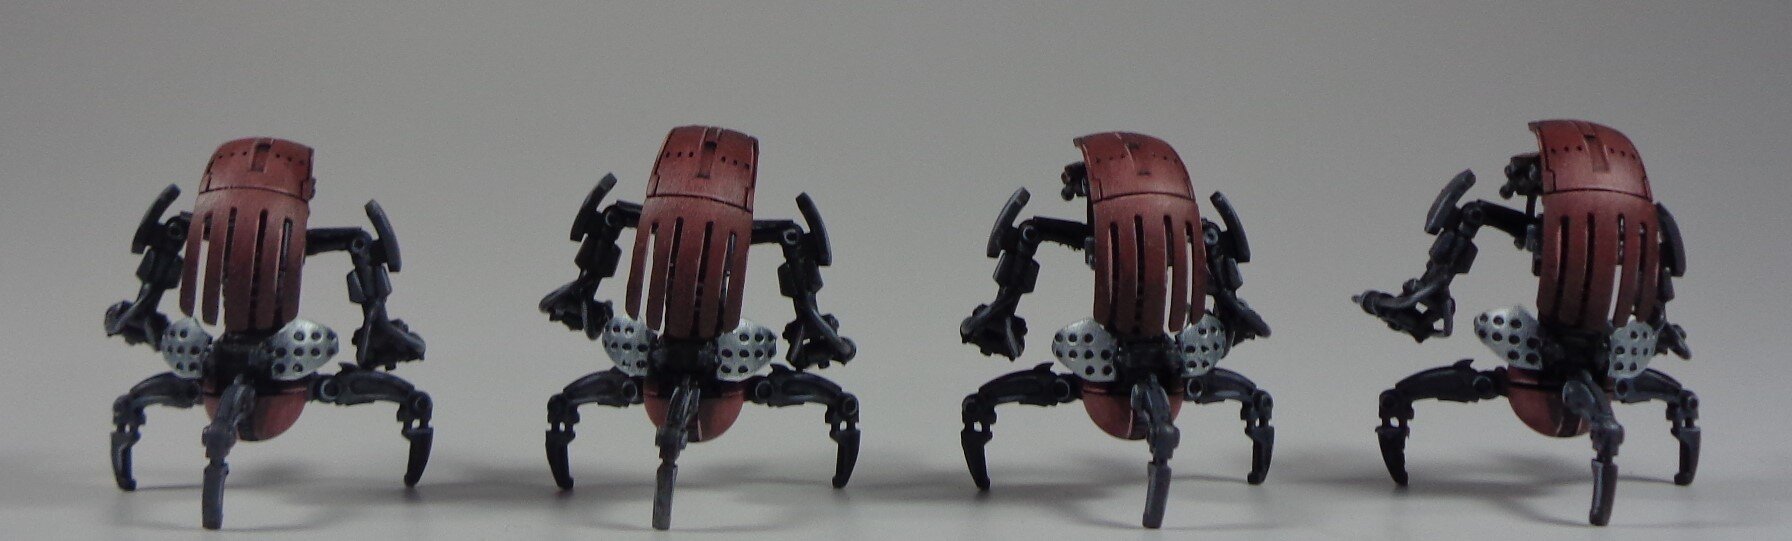 Star Wars Legion Miniature Painting Sevice Droidekas B-1 Droids Dooku Grevious (8).JPG